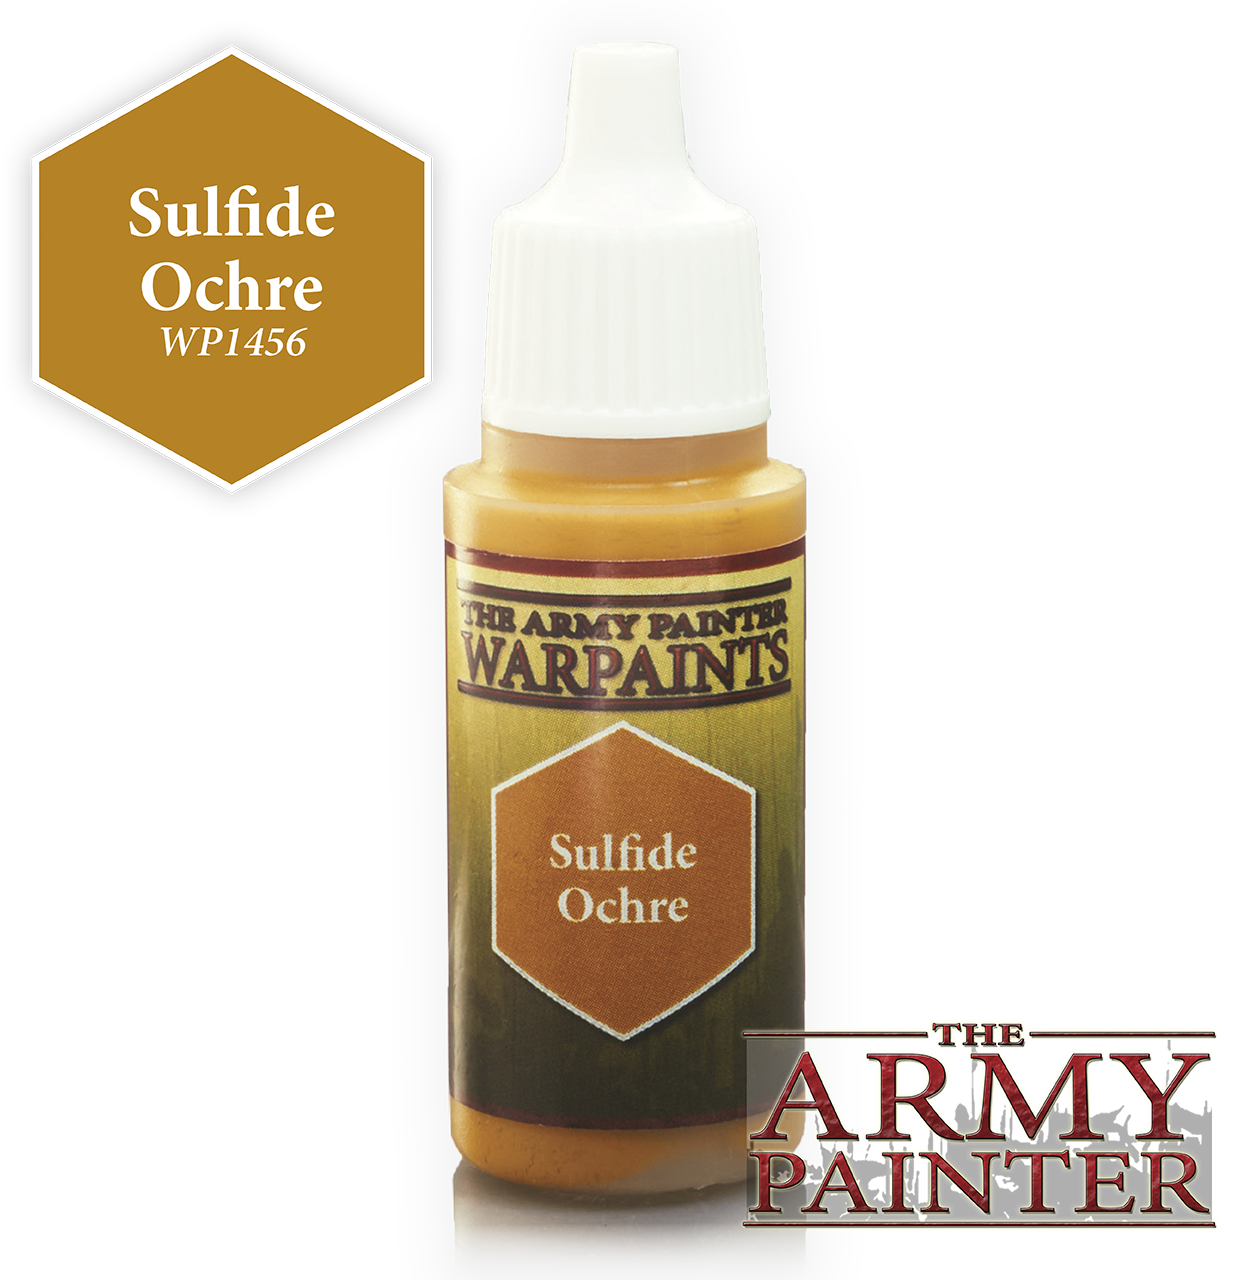 Sulfide Ochre - Army Painter Warpaints